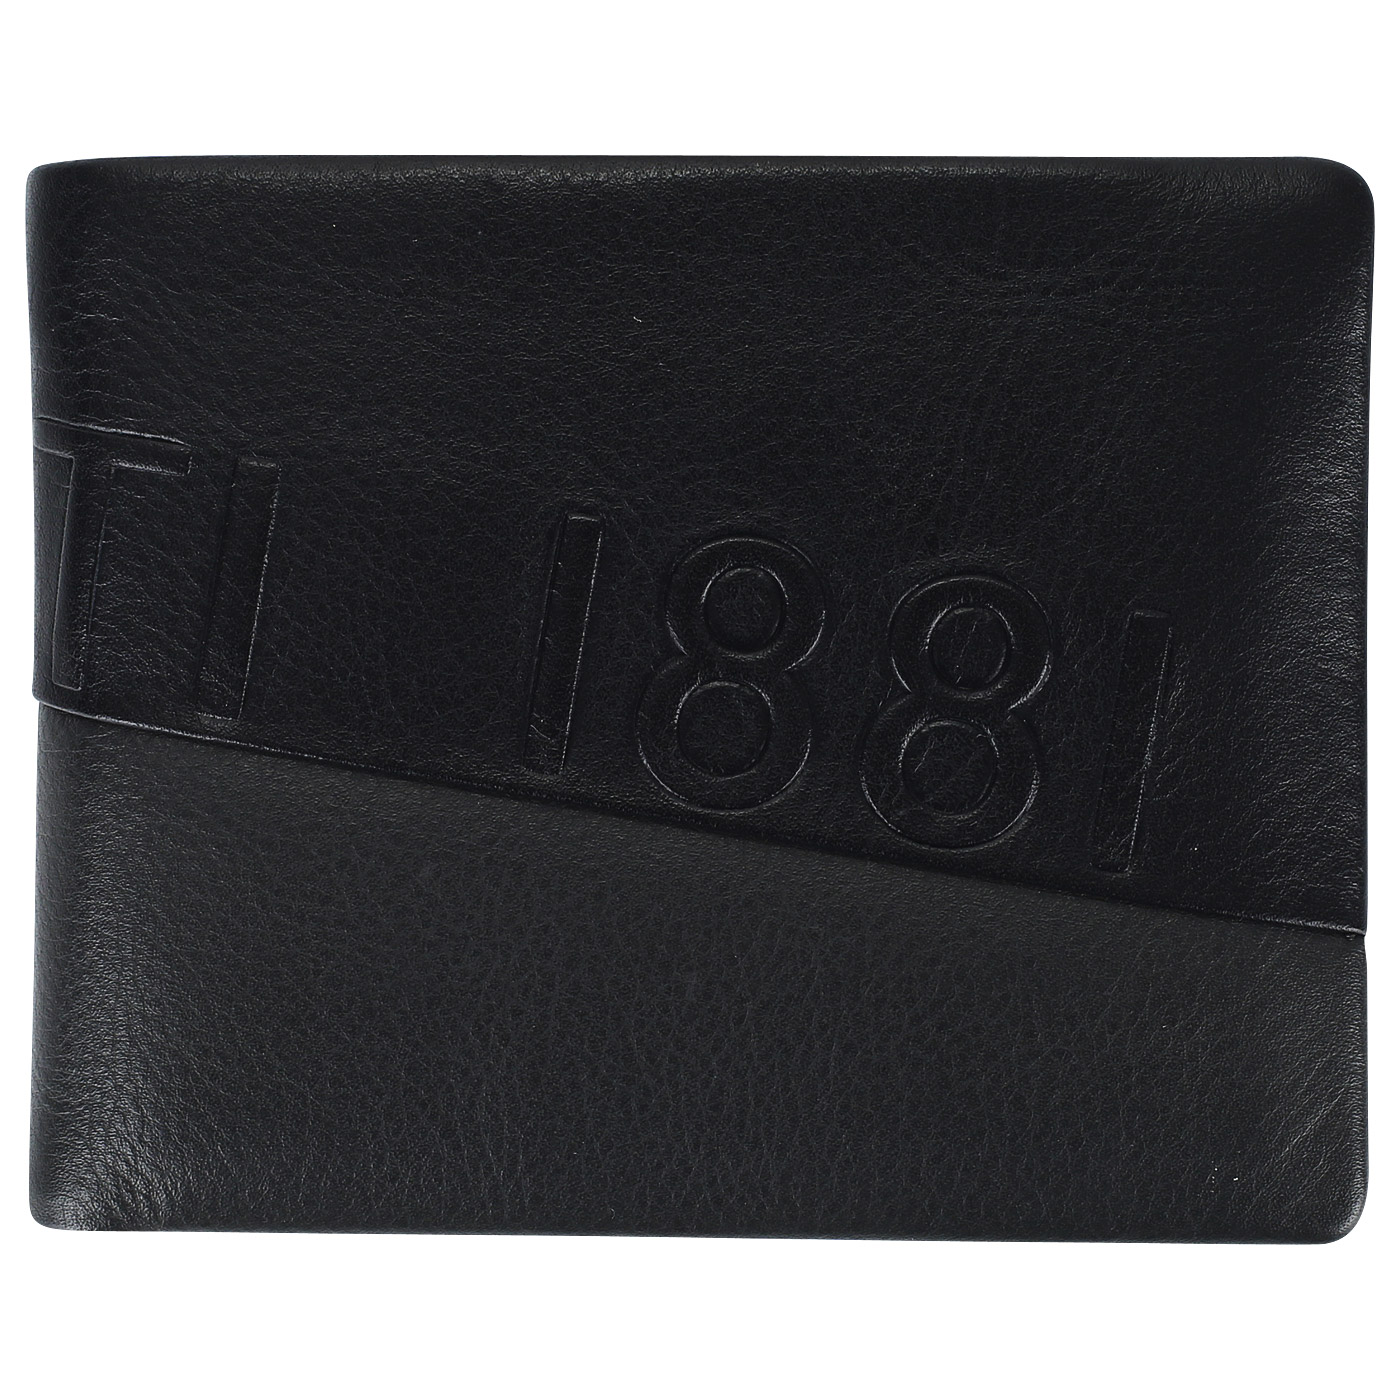 Cerruti 1881 Кожаный кошелек с логотипом бренда